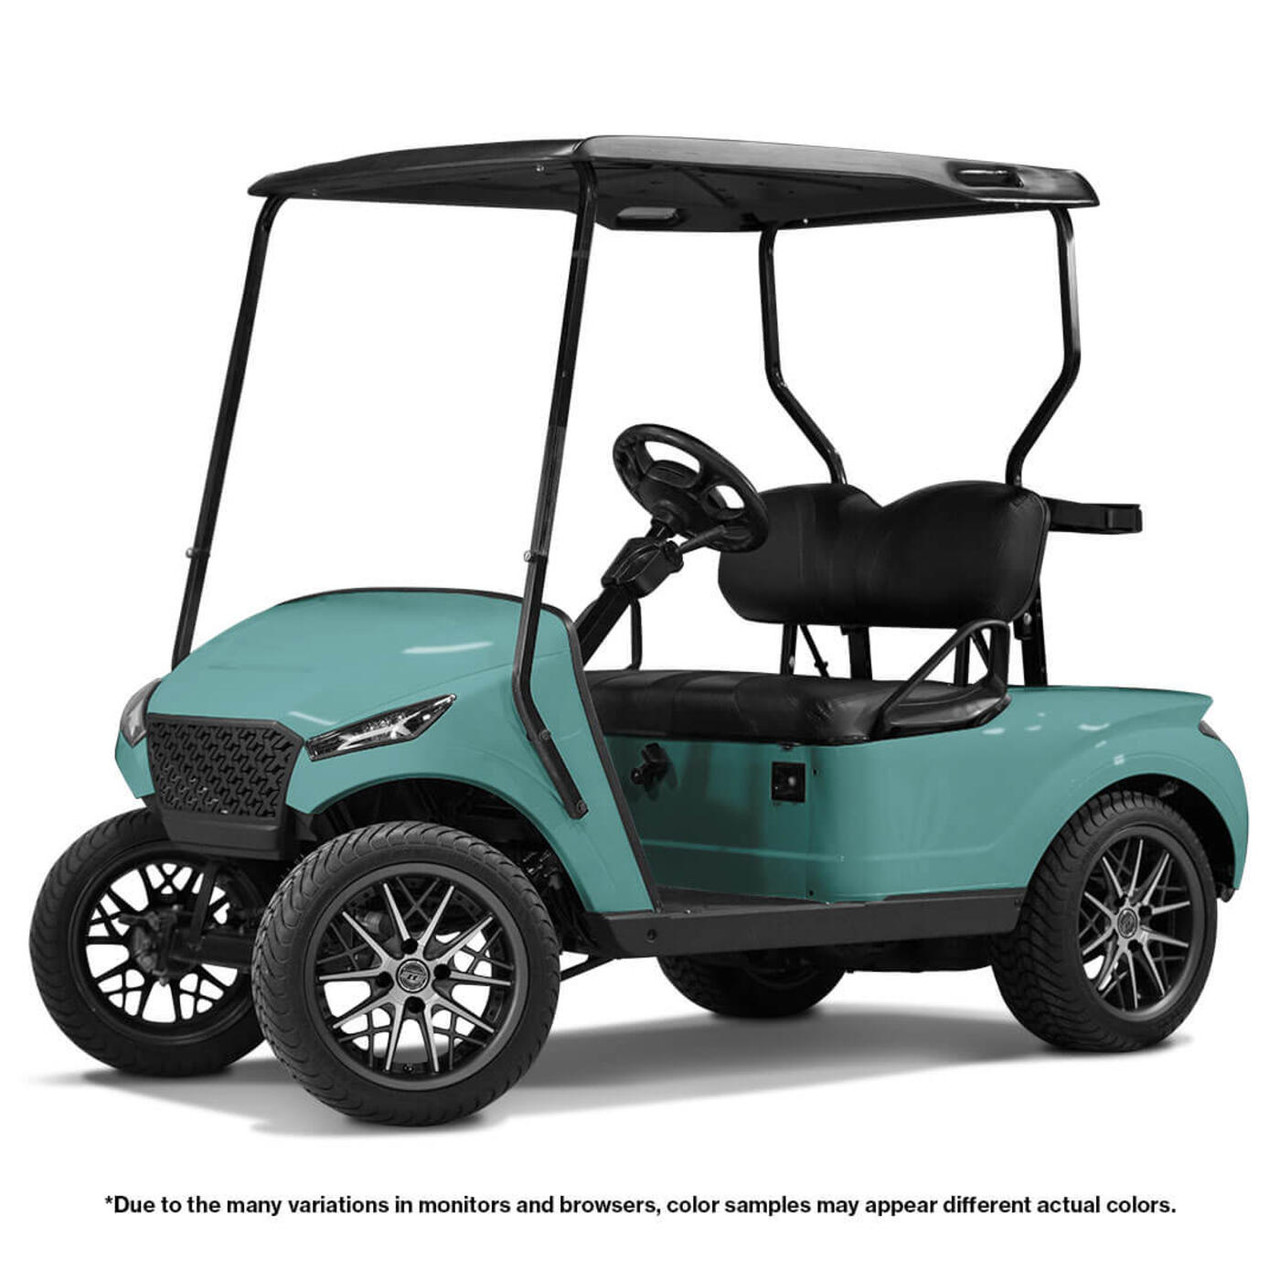 MadJax Storm Body Kit For EZGO TXT Golf Cart - Sea Storm (Fits 1994-Up), 05-235-BG02